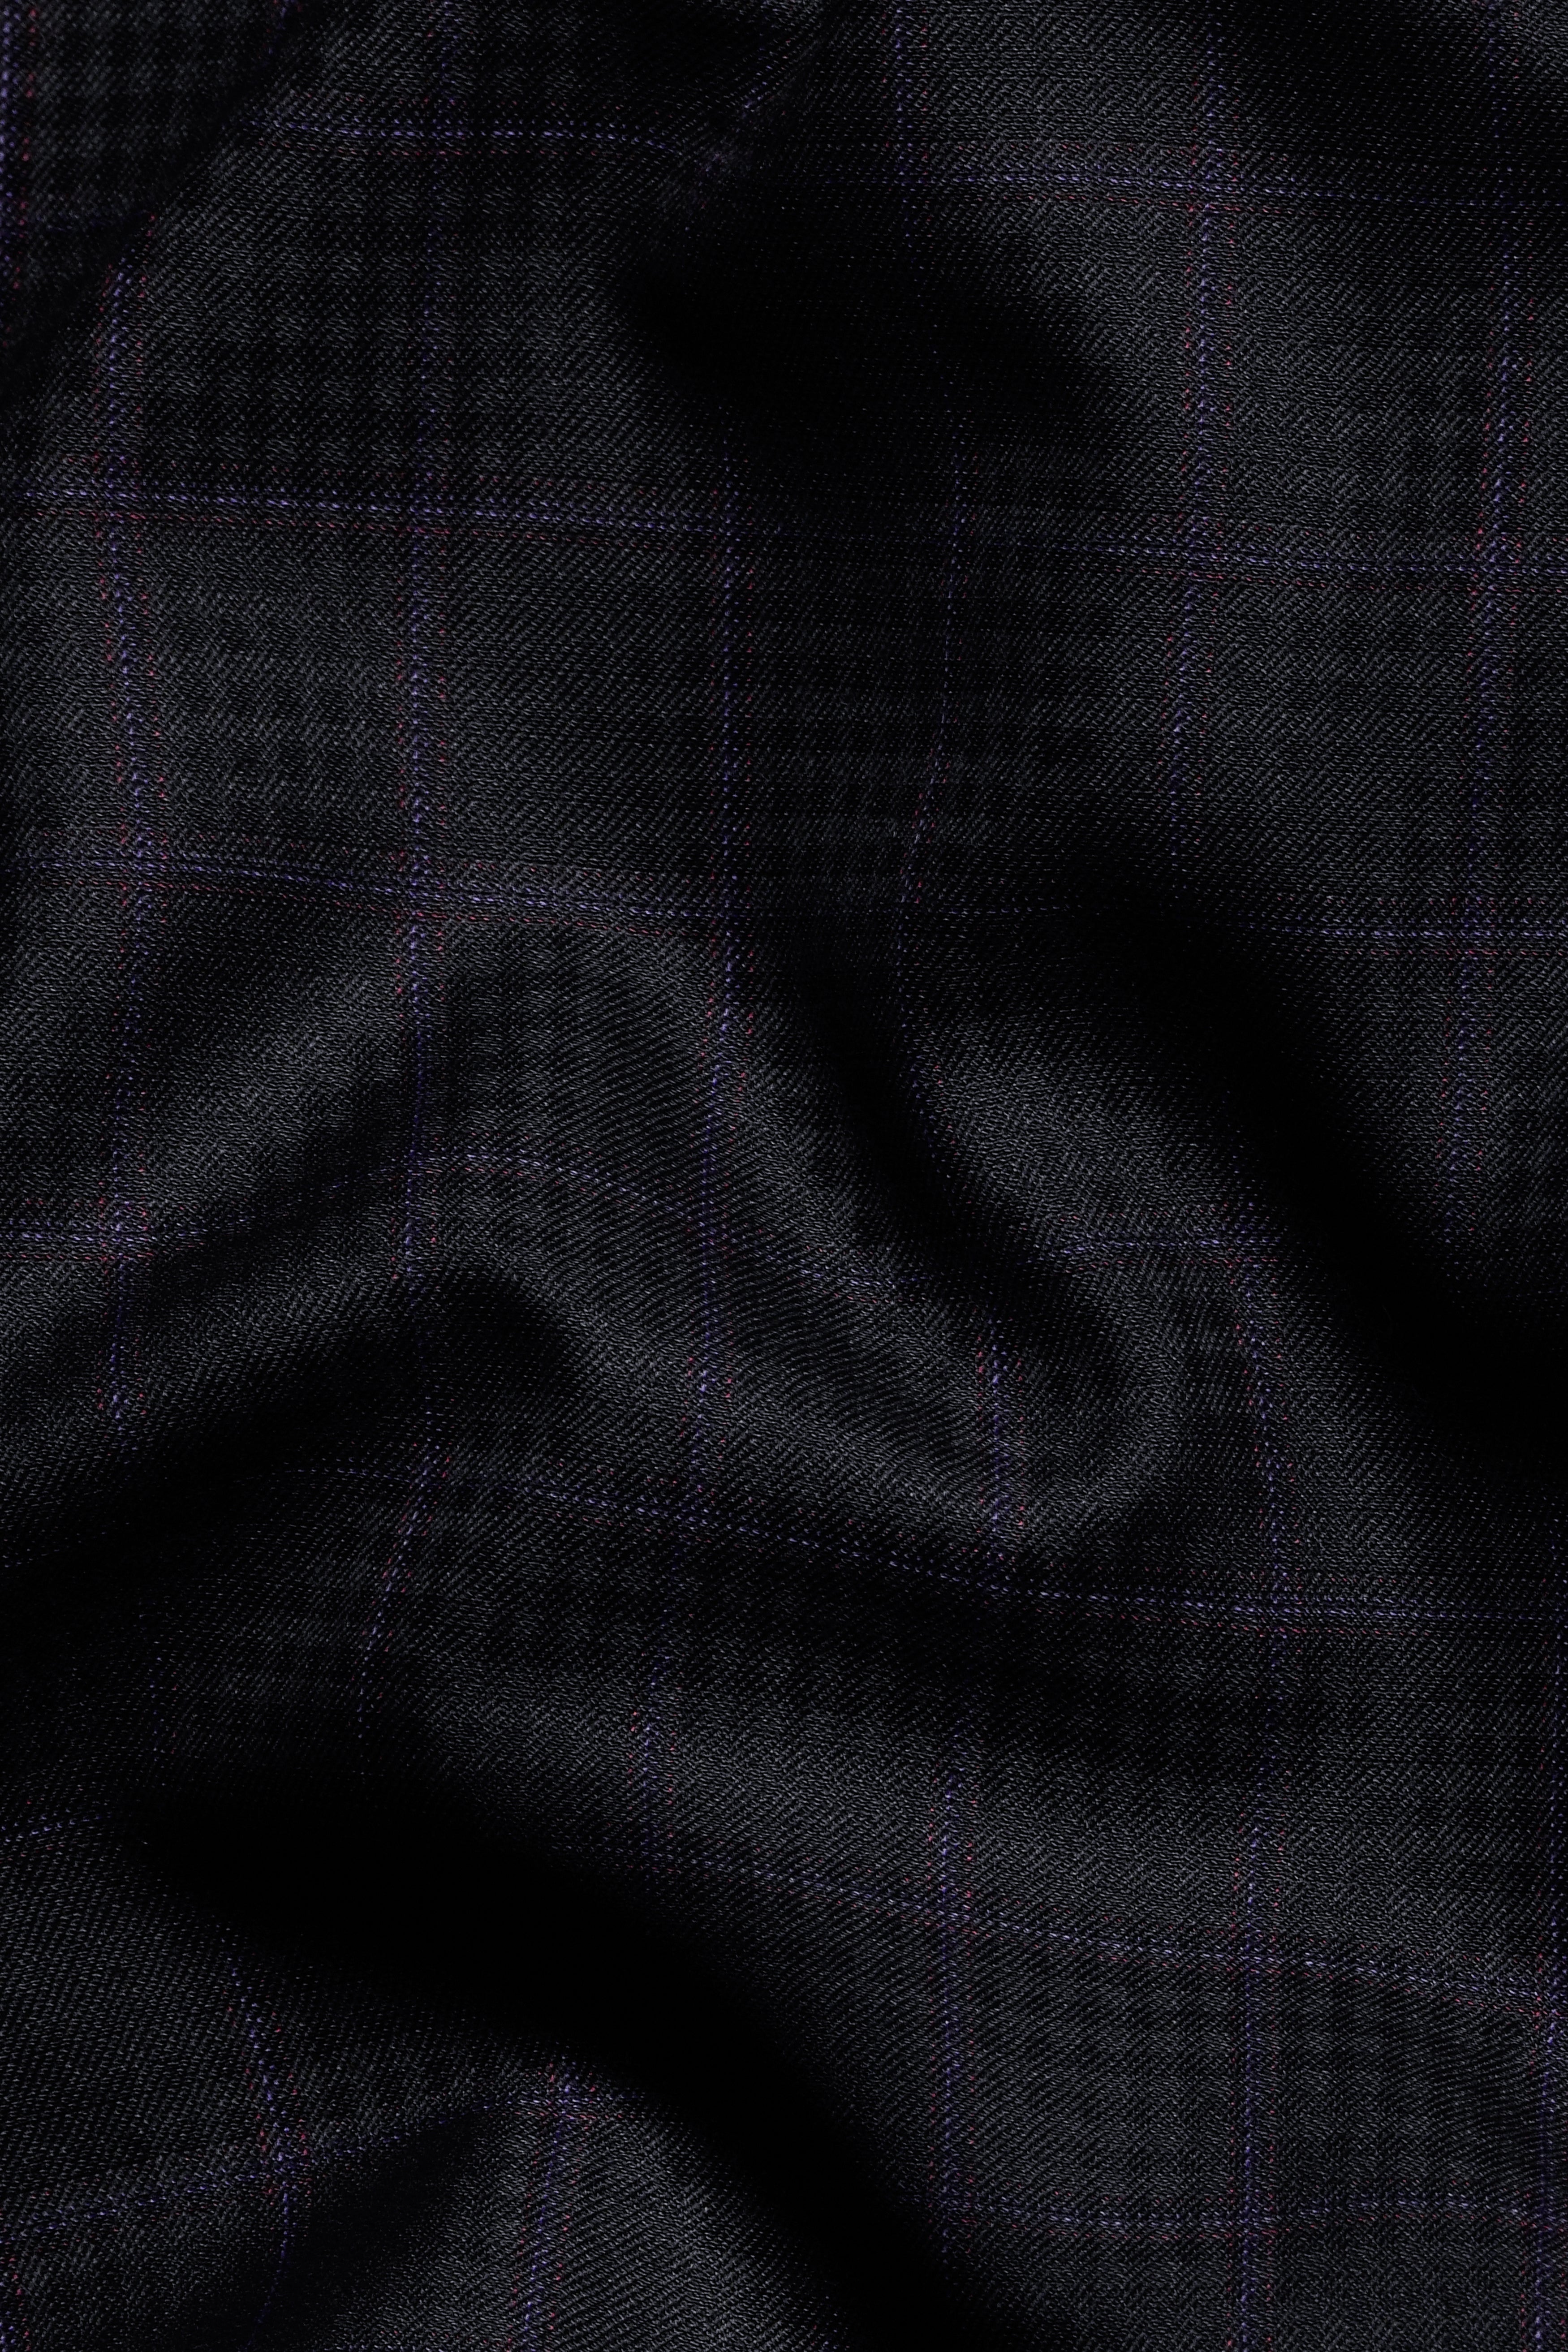 Bastille Black and Murasaki Purple Windowpane Cross Buttoned Wool Rich Bandhgala Suit ST3063-CBG2-36, ST3063-CBG2-38, ST3063-CBG2-40, ST3063-CBG2-42, ST3063-CBG2-44, ST3063-CBG2-46, ST3063-CBG2-48, ST3063-CBG2-50, ST3063-CBG2-52, ST3063-CBG2-54, ST3063-CBG2-56, ST3063-CBG2-58, ST3063-CBG2-60